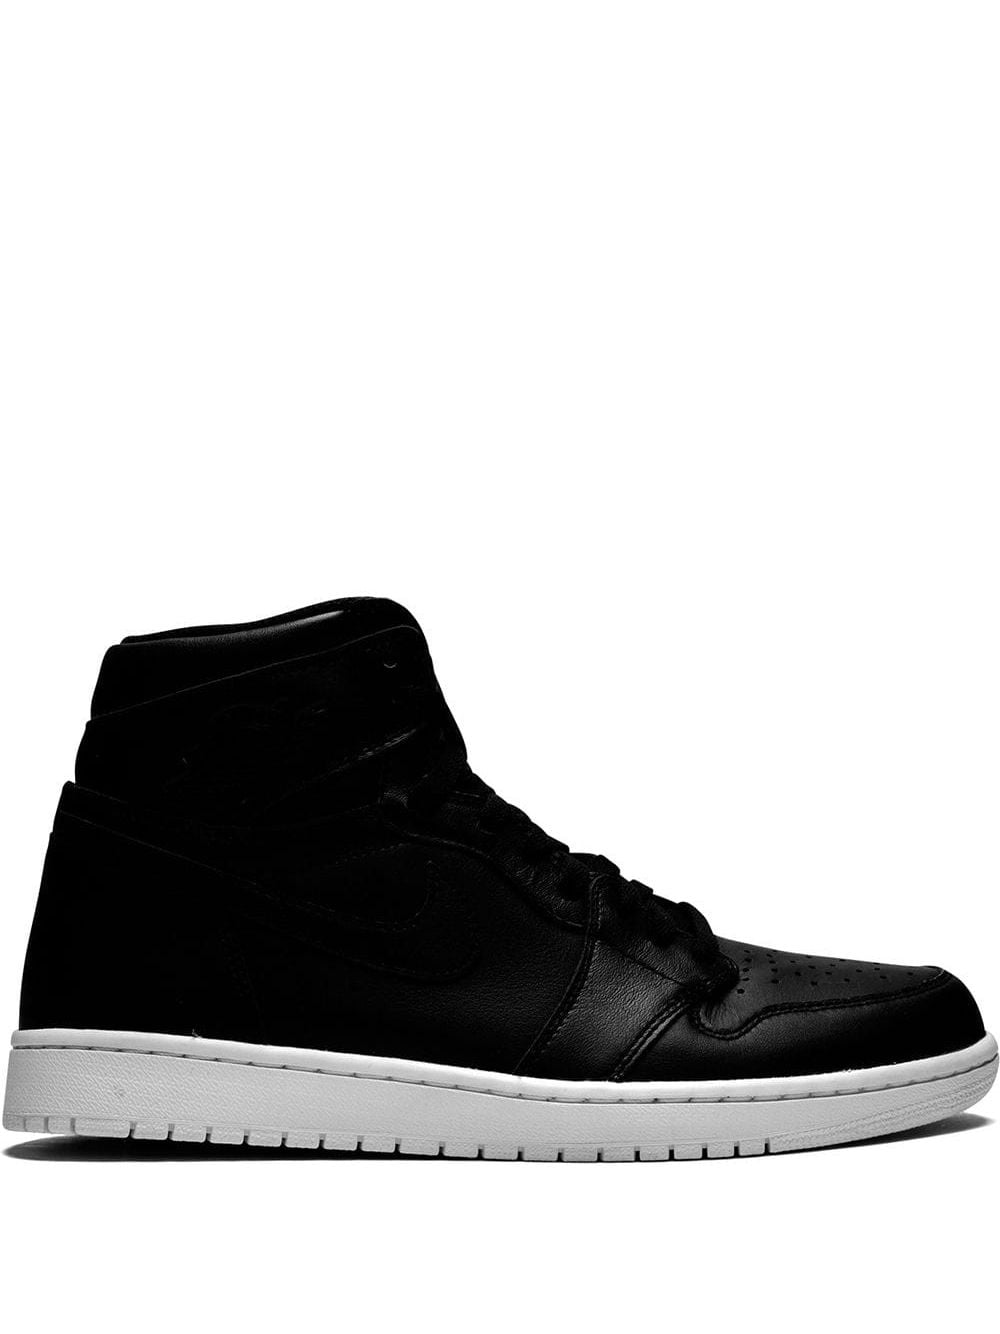 Jordan Air Jordan 1 Retro High OG "Cyber Monday" sneakers - Black von Jordan